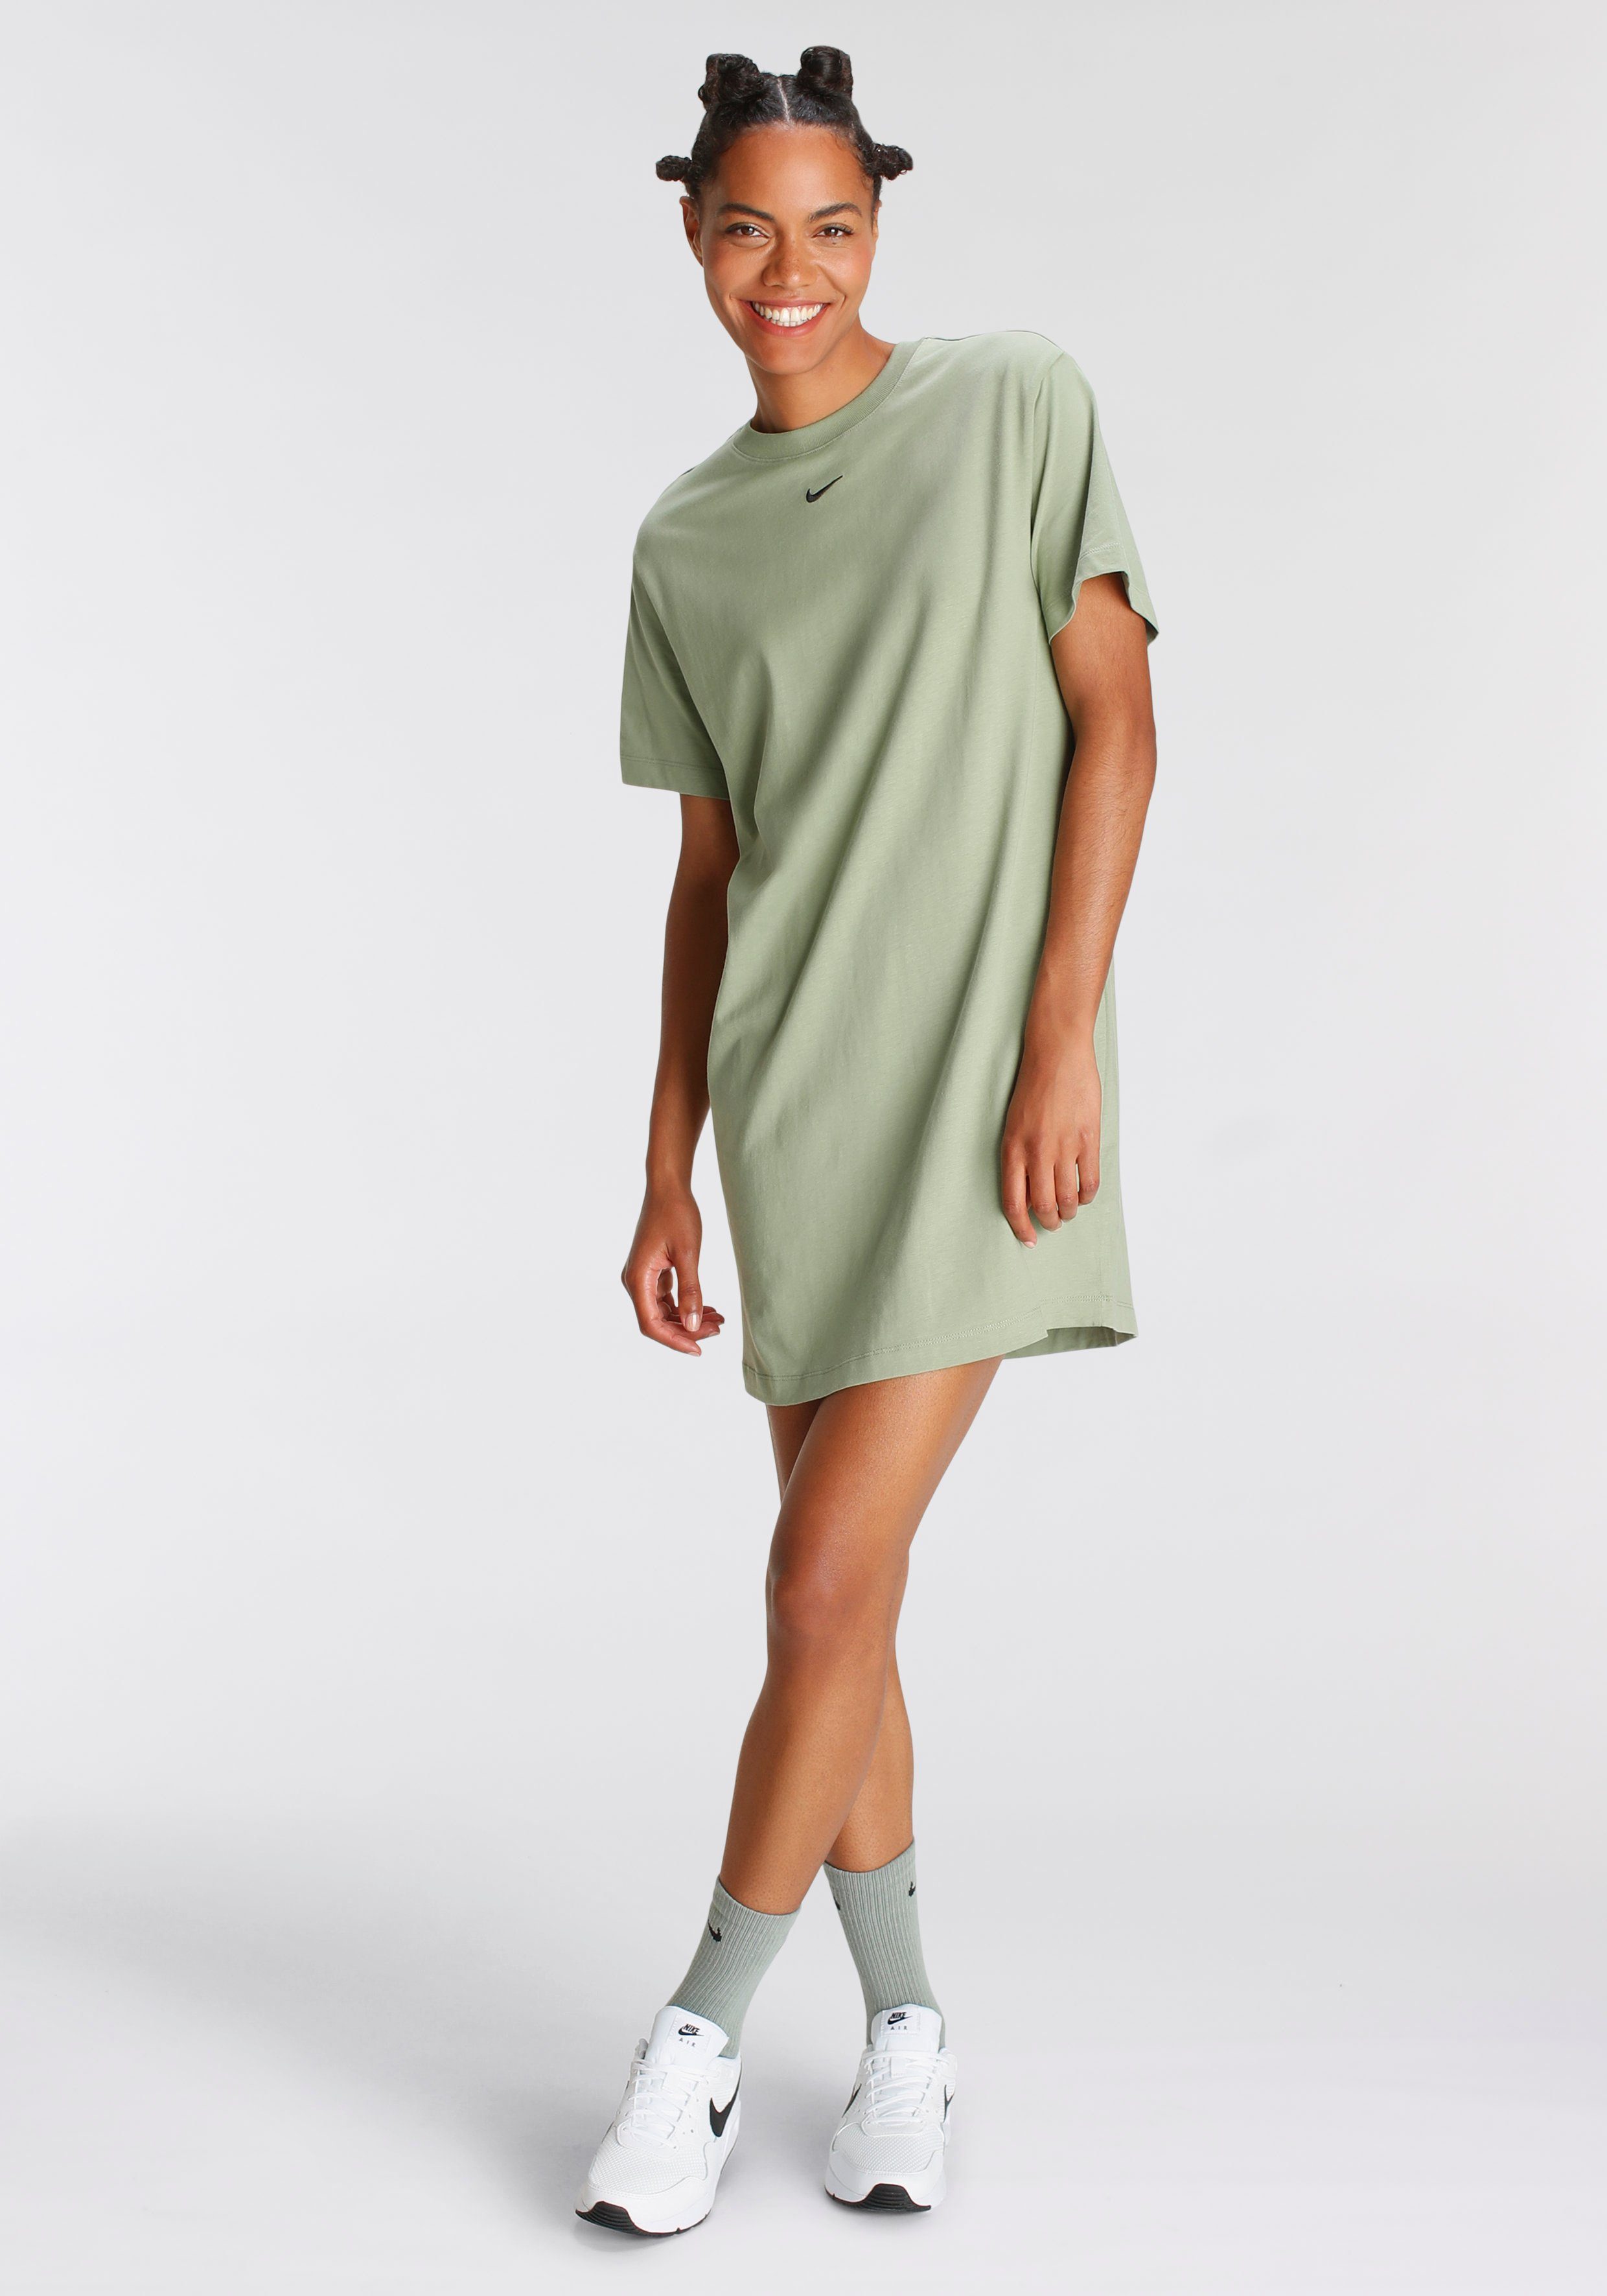 OIL WOMEN'S GREEN/BLACK Nike Sportswear SHORT-SLEEVE Sommerkleid DRESS ESSENTIAL